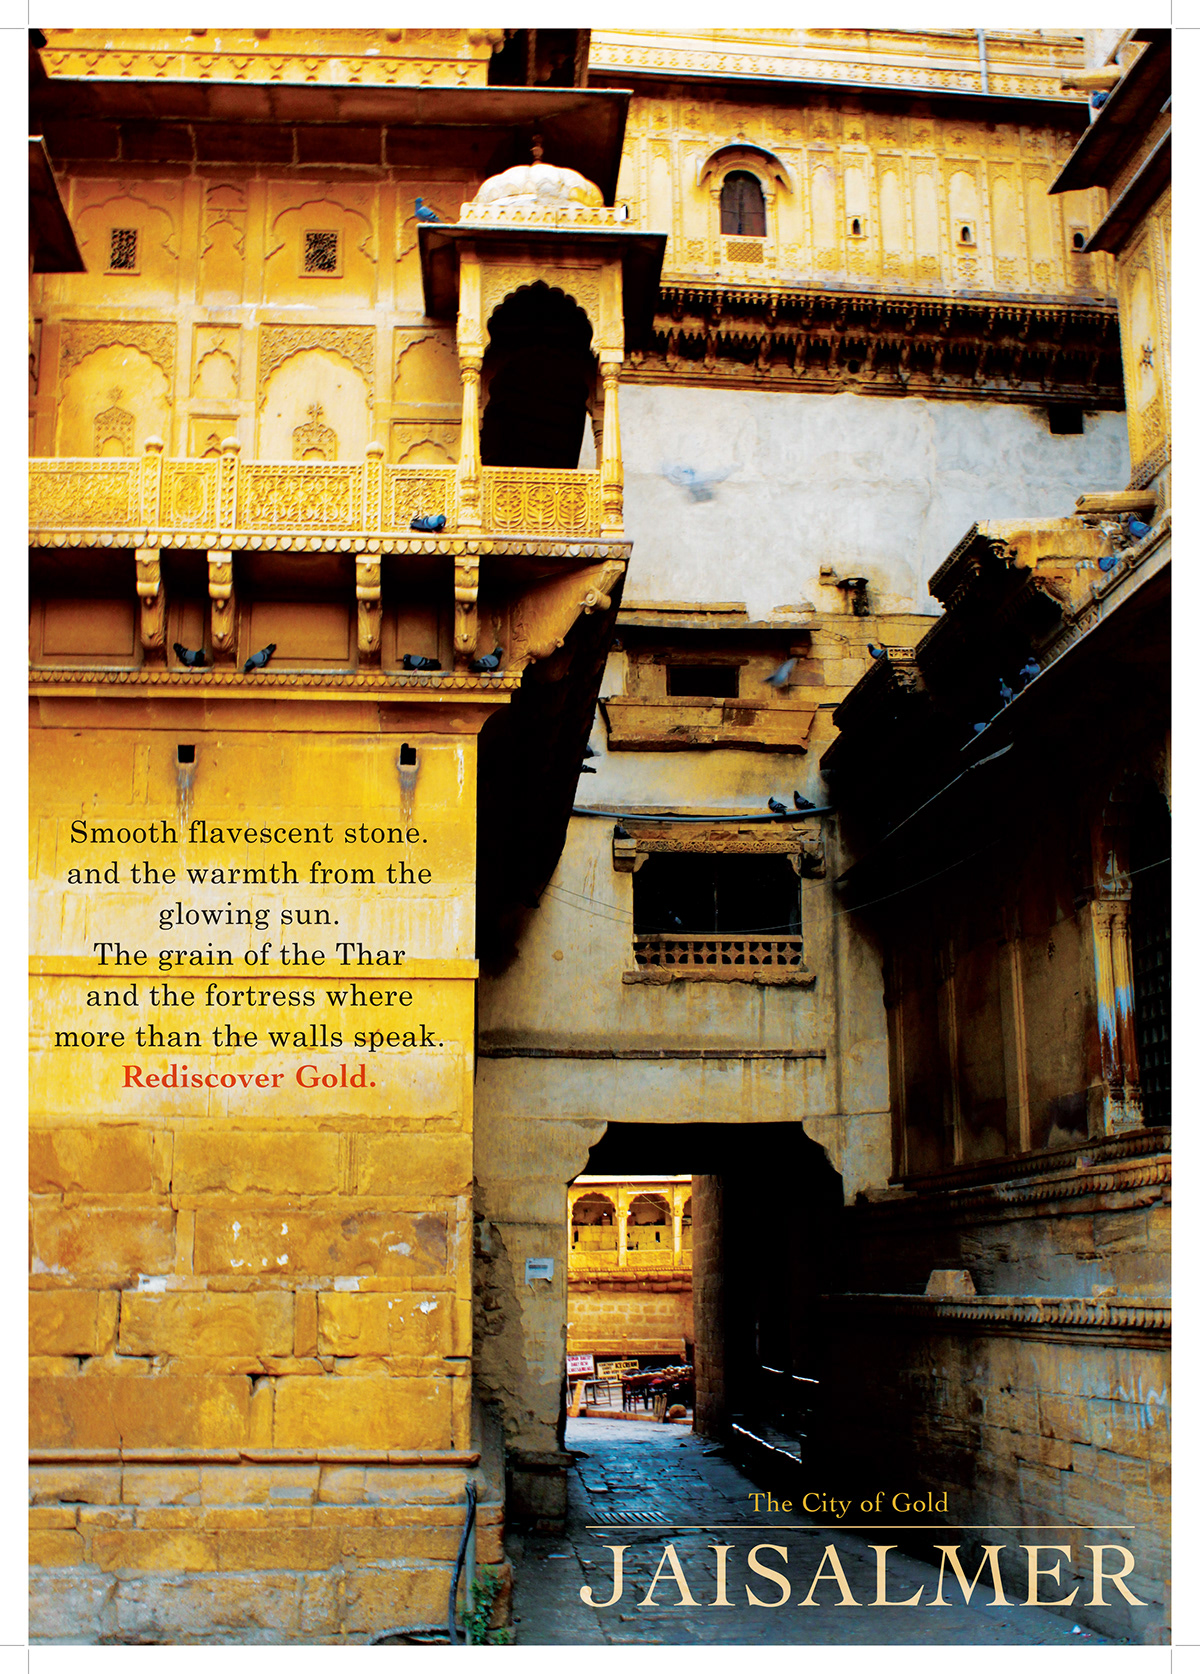 jaisalmer India Rajasthan fort posters